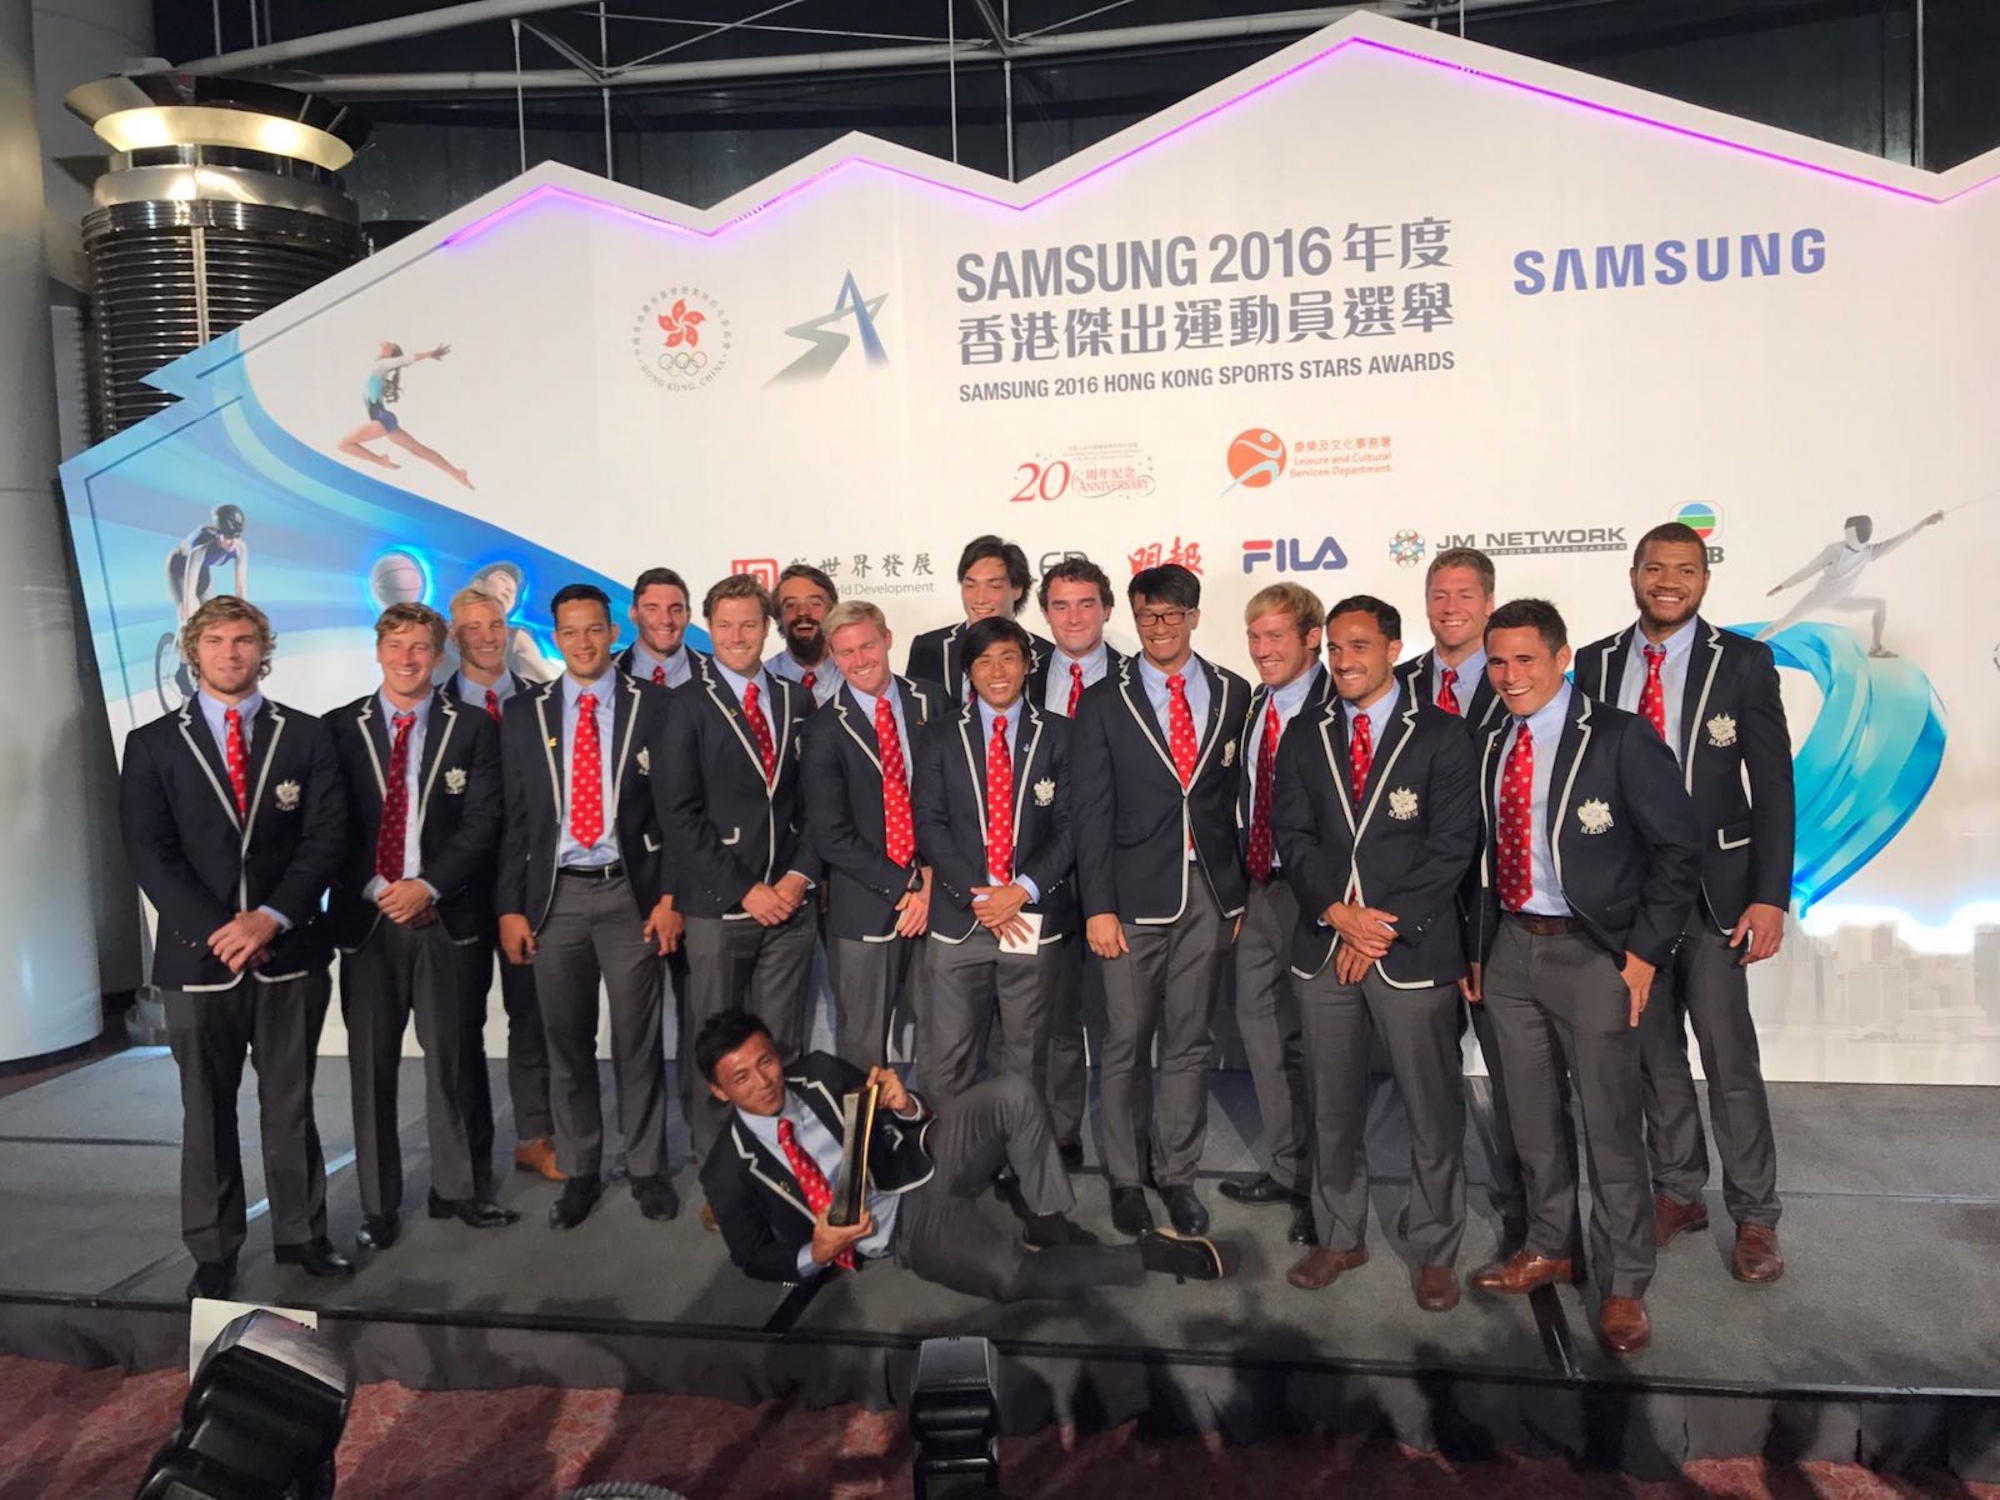 HKRU men’s sevens team win 7th Samsung Hong Kong Sports Stars Team Award